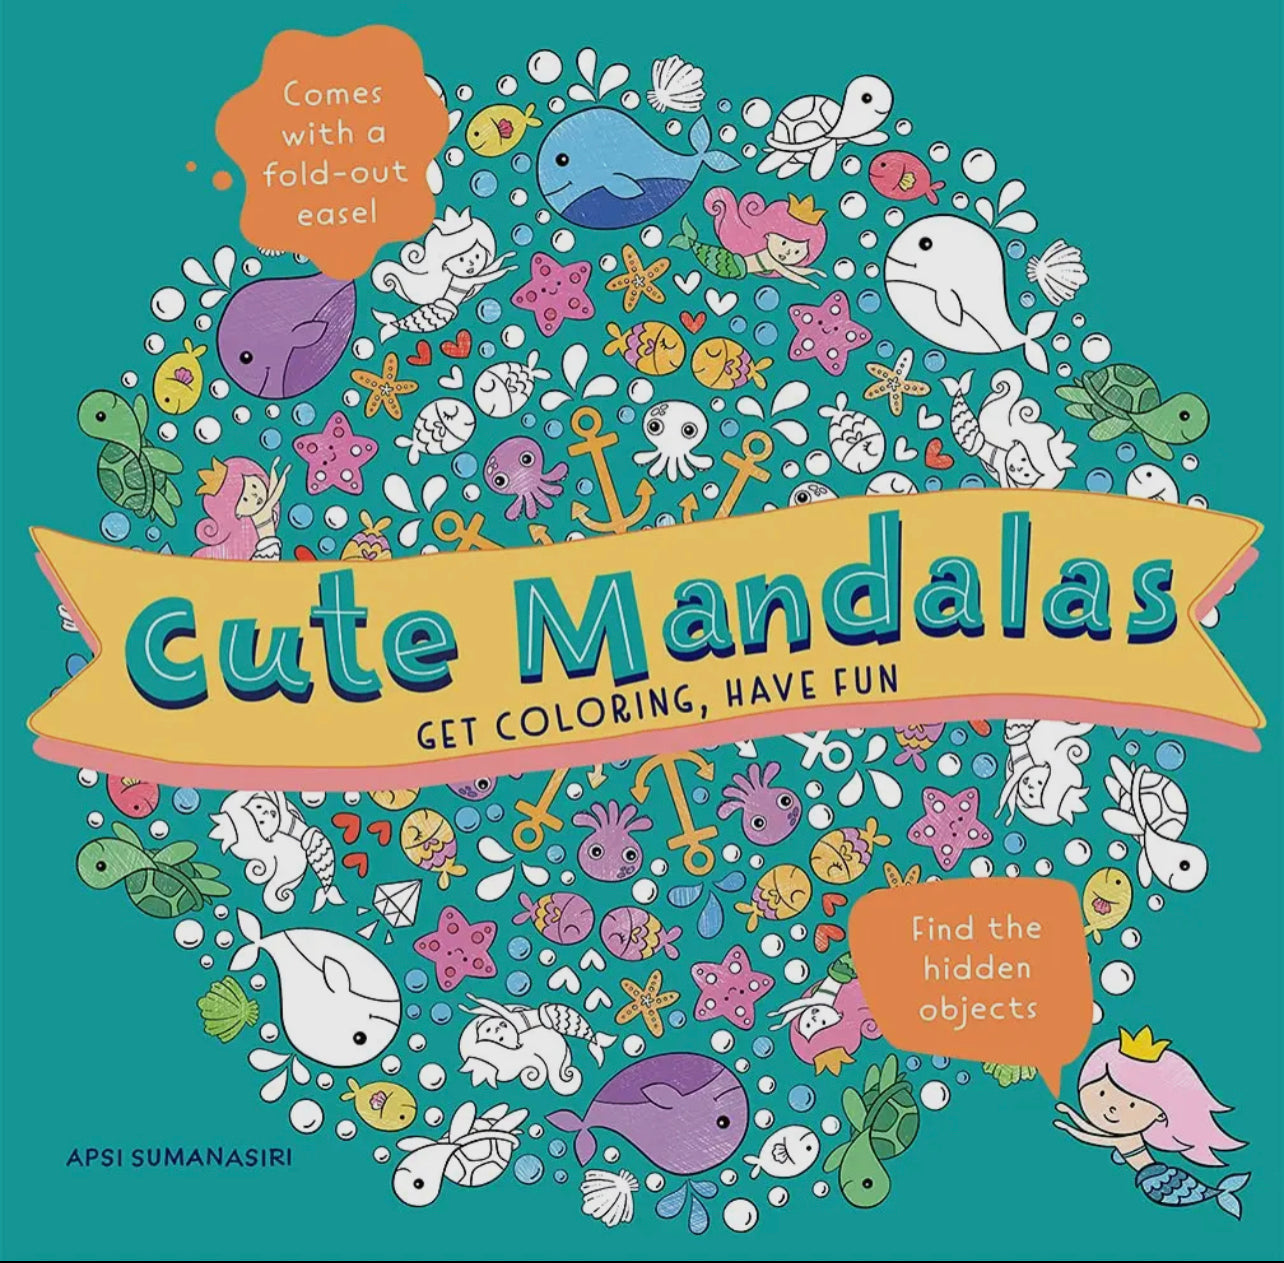 Cute Mandala Coloring and Hidden Objects Book